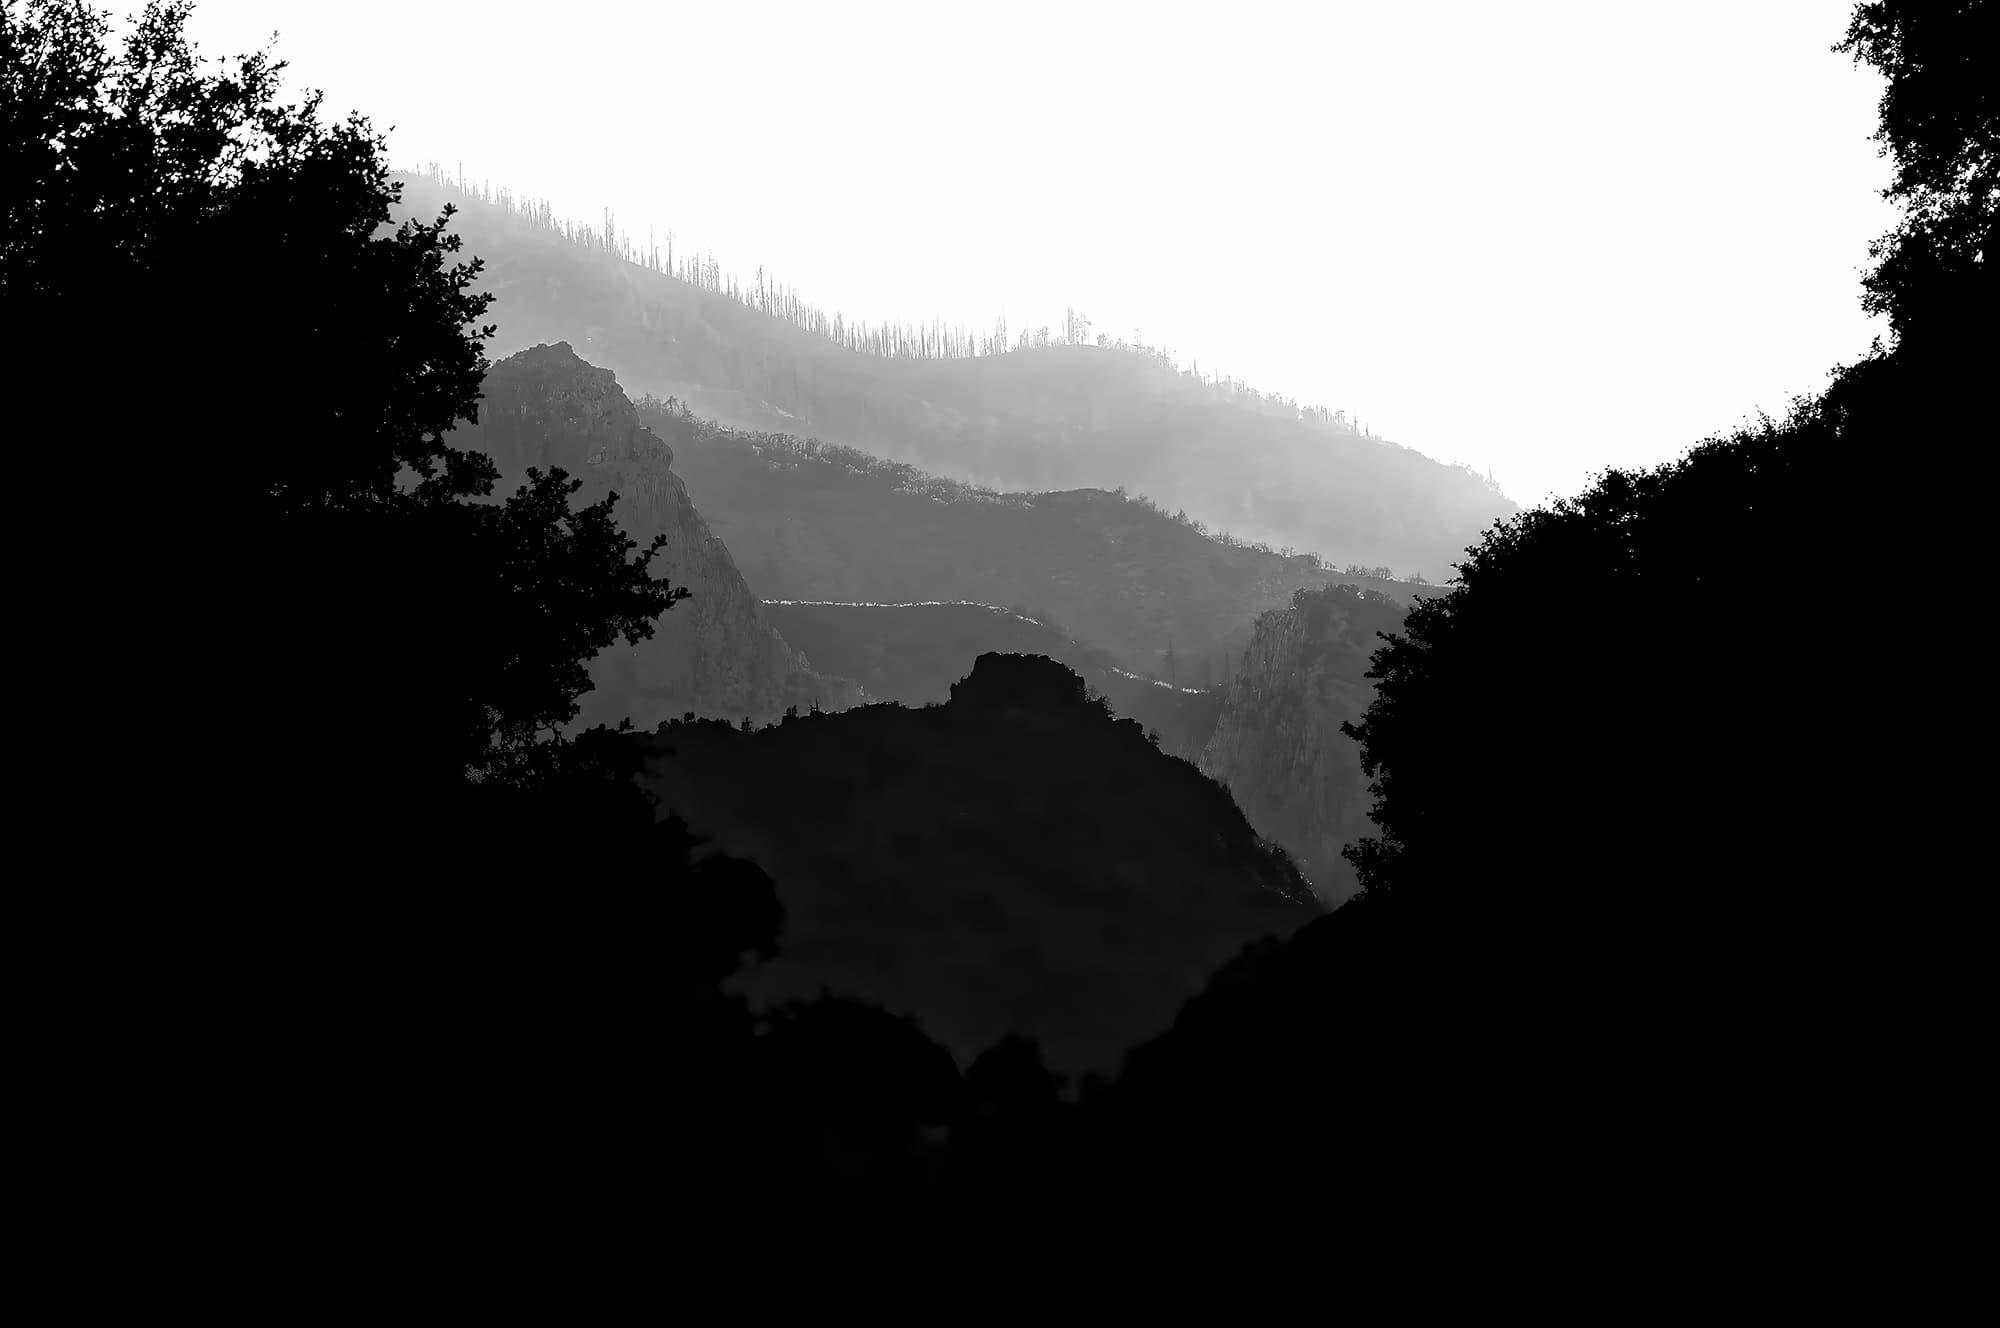 A multi-tonal cascading view of hills reaching towards the horizon